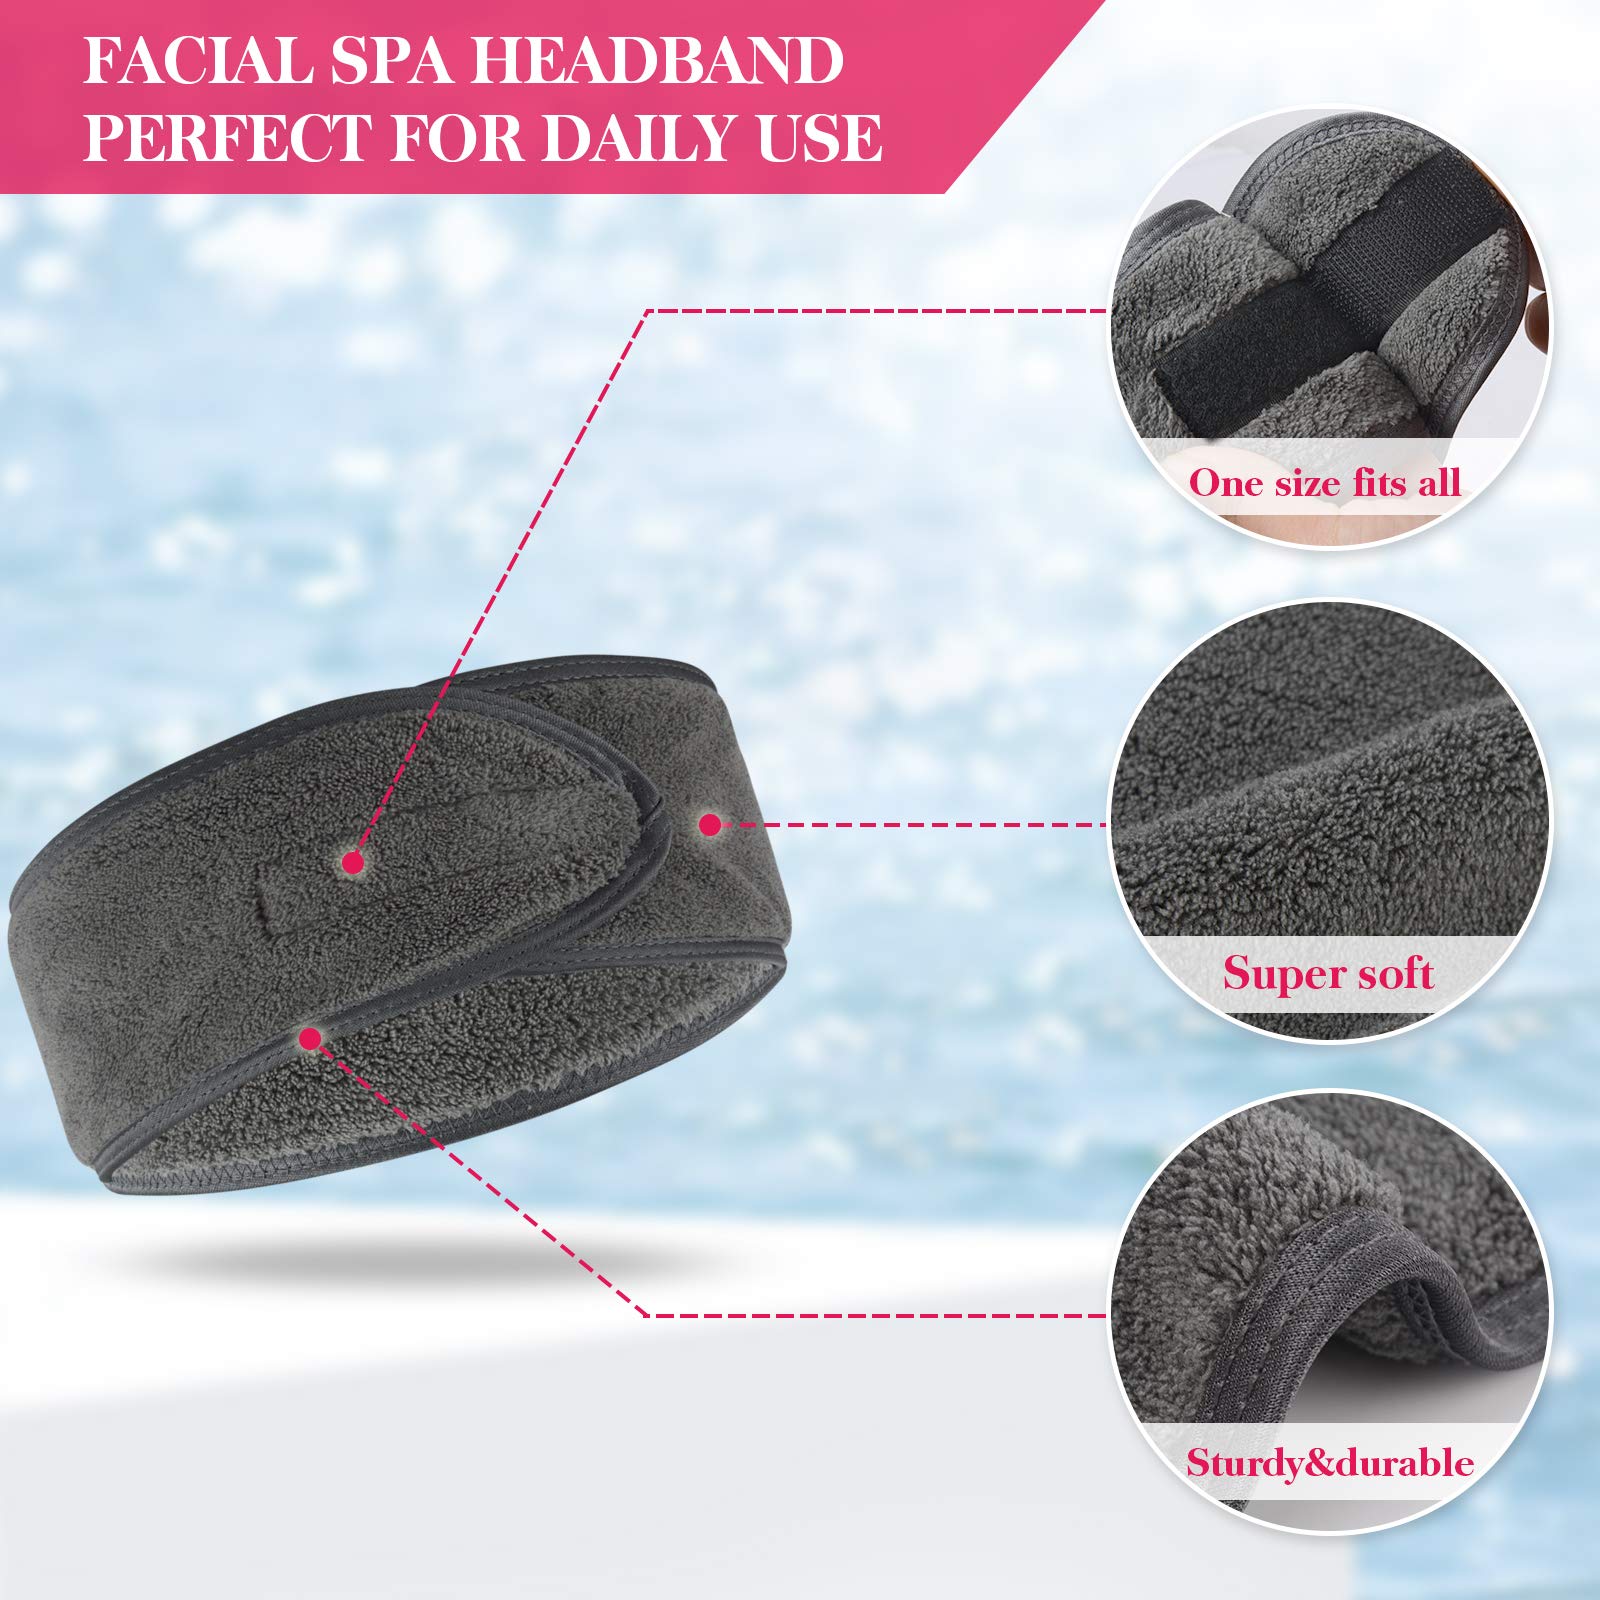 facial mitts with beauty spa headbands